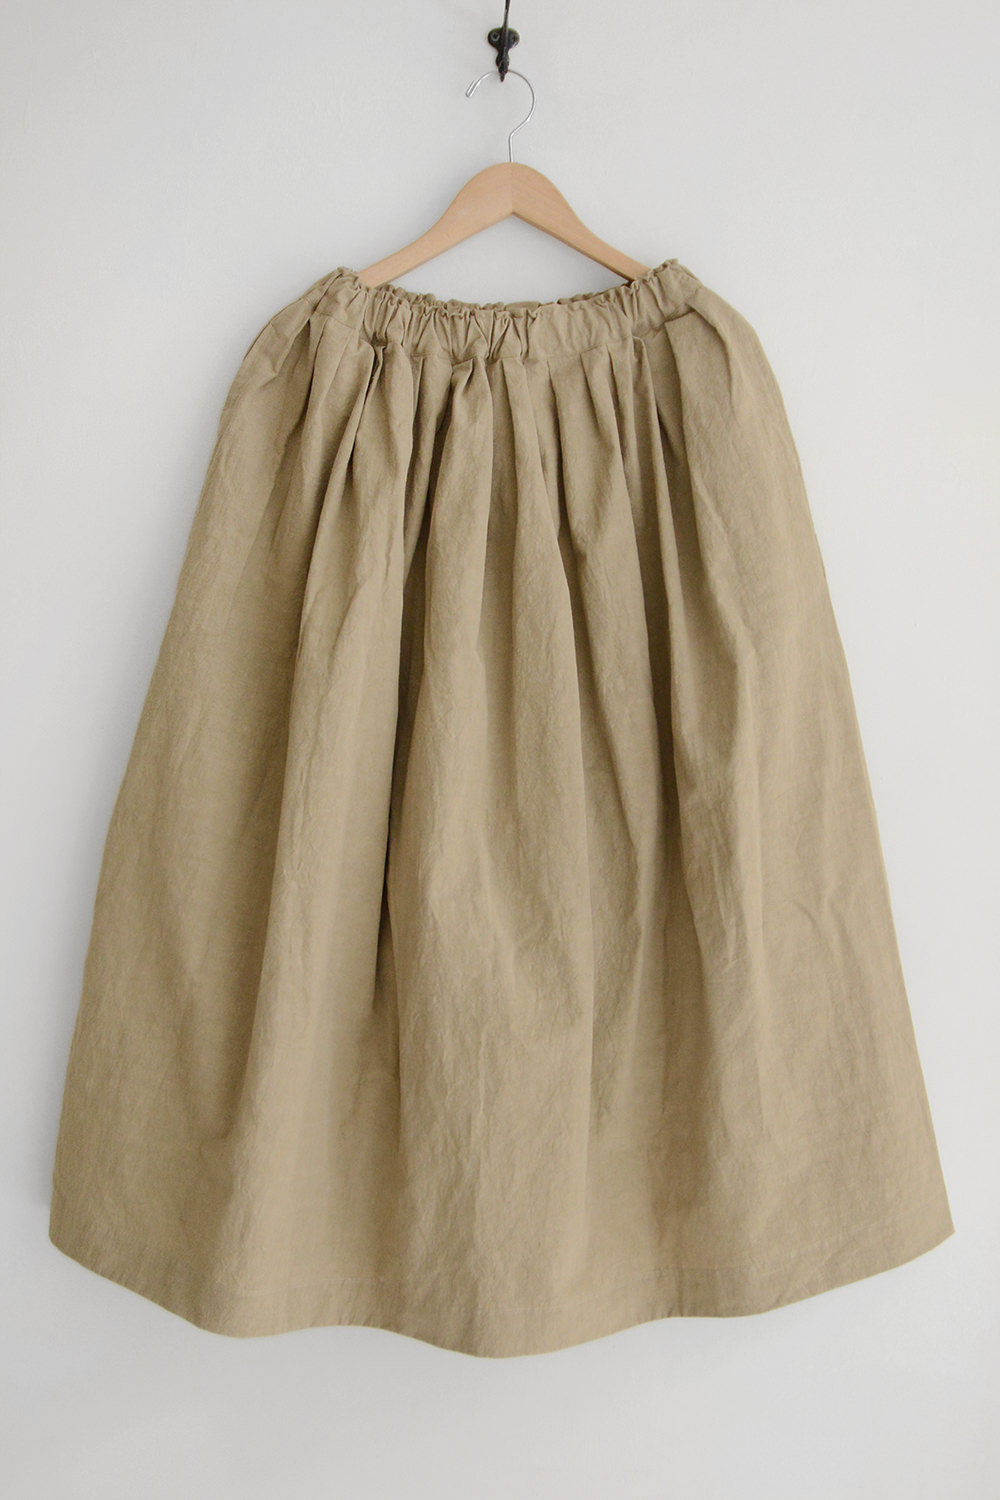 Makie Cotton Linen Skirt Top Picture